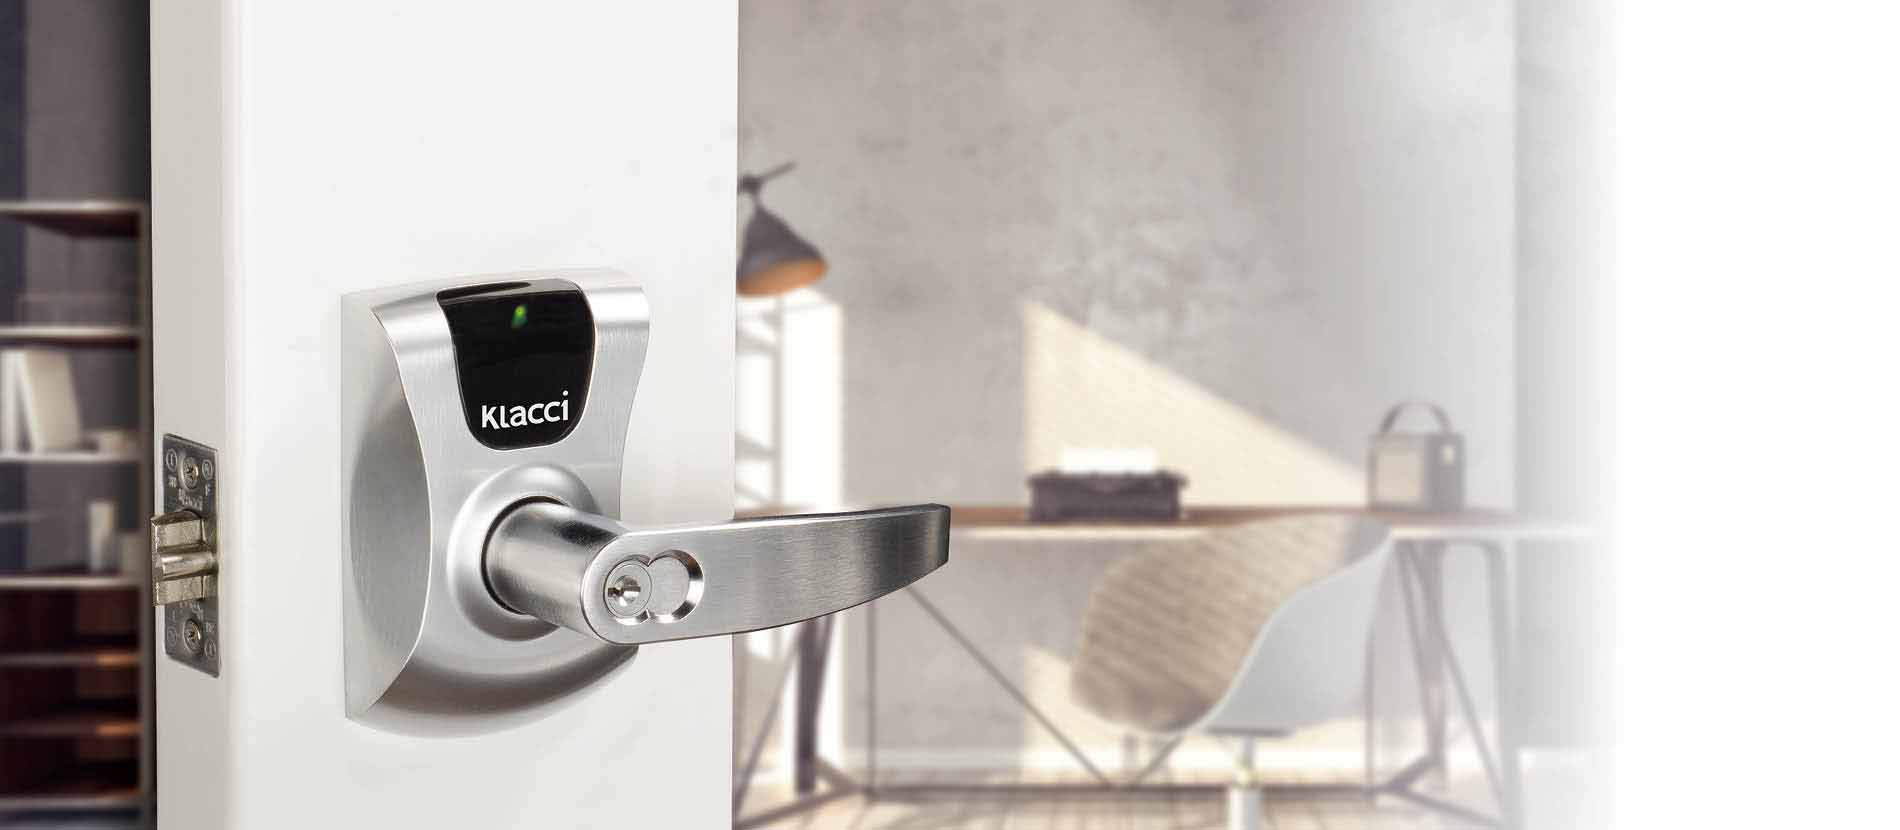 Klacci iF Series Mobile Biometrics Touchless Smart Lock iF-01 Cylindrical Lock